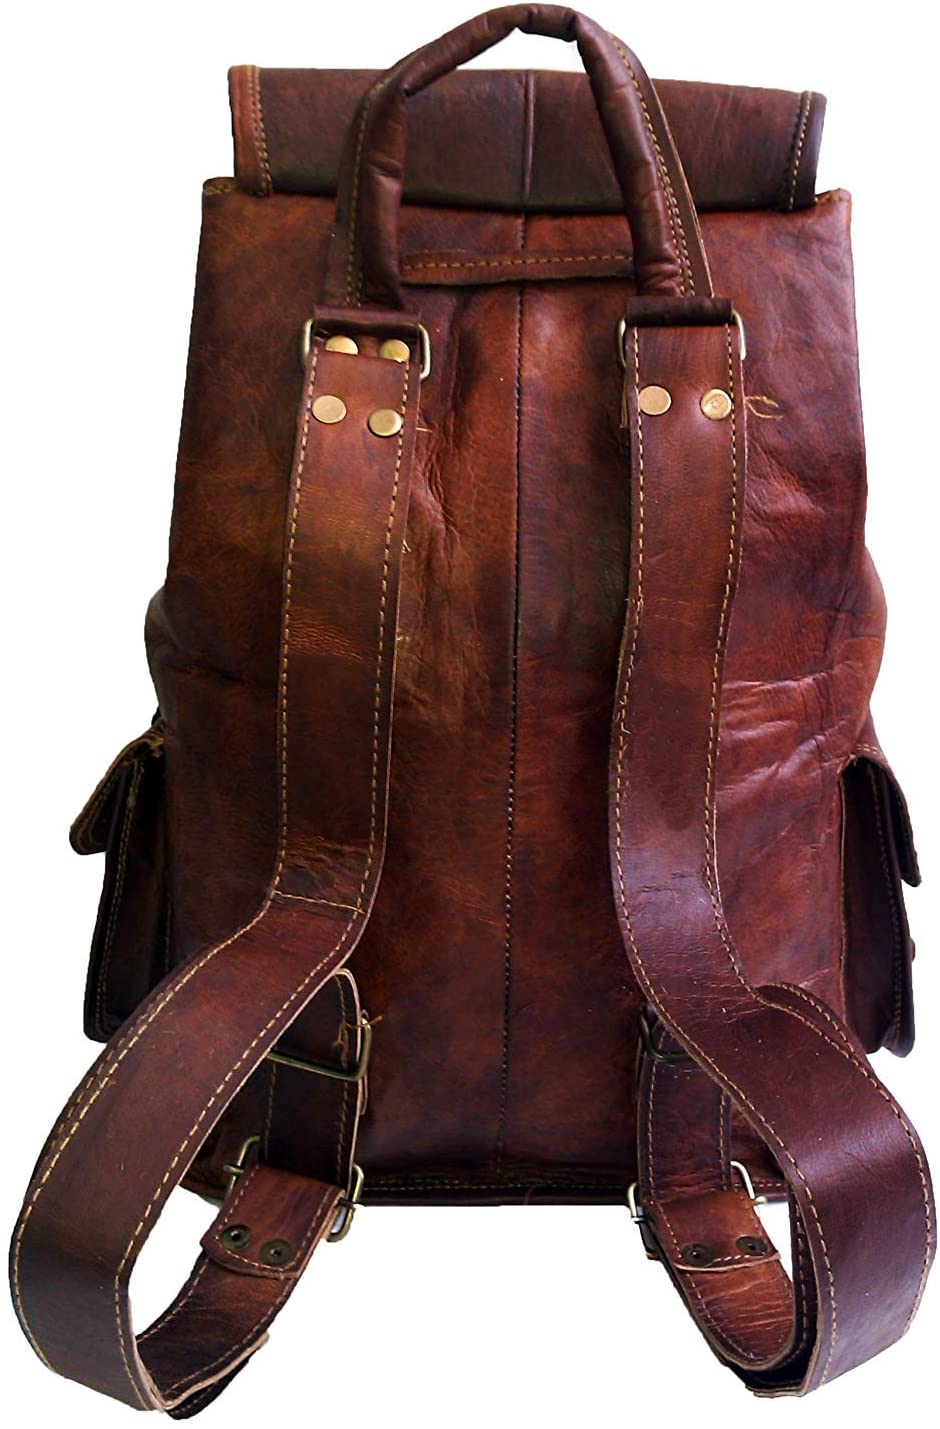 18″ Brown Leather Backpack Vintage Rucksack Laptop Bag Water Resistant ...